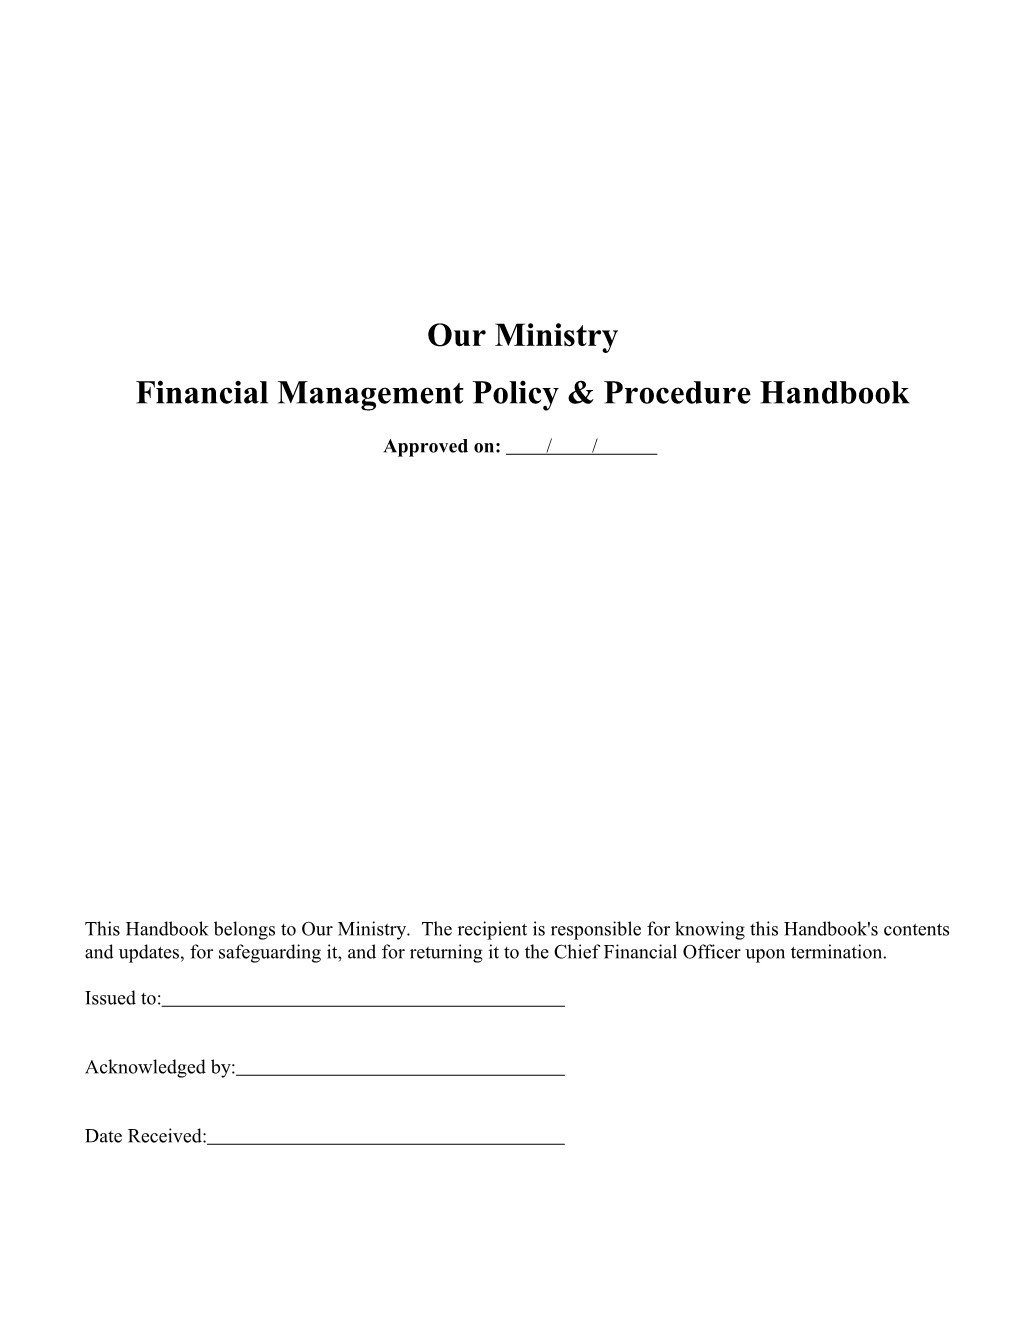 Financial Management Policy & Procedure Handbook